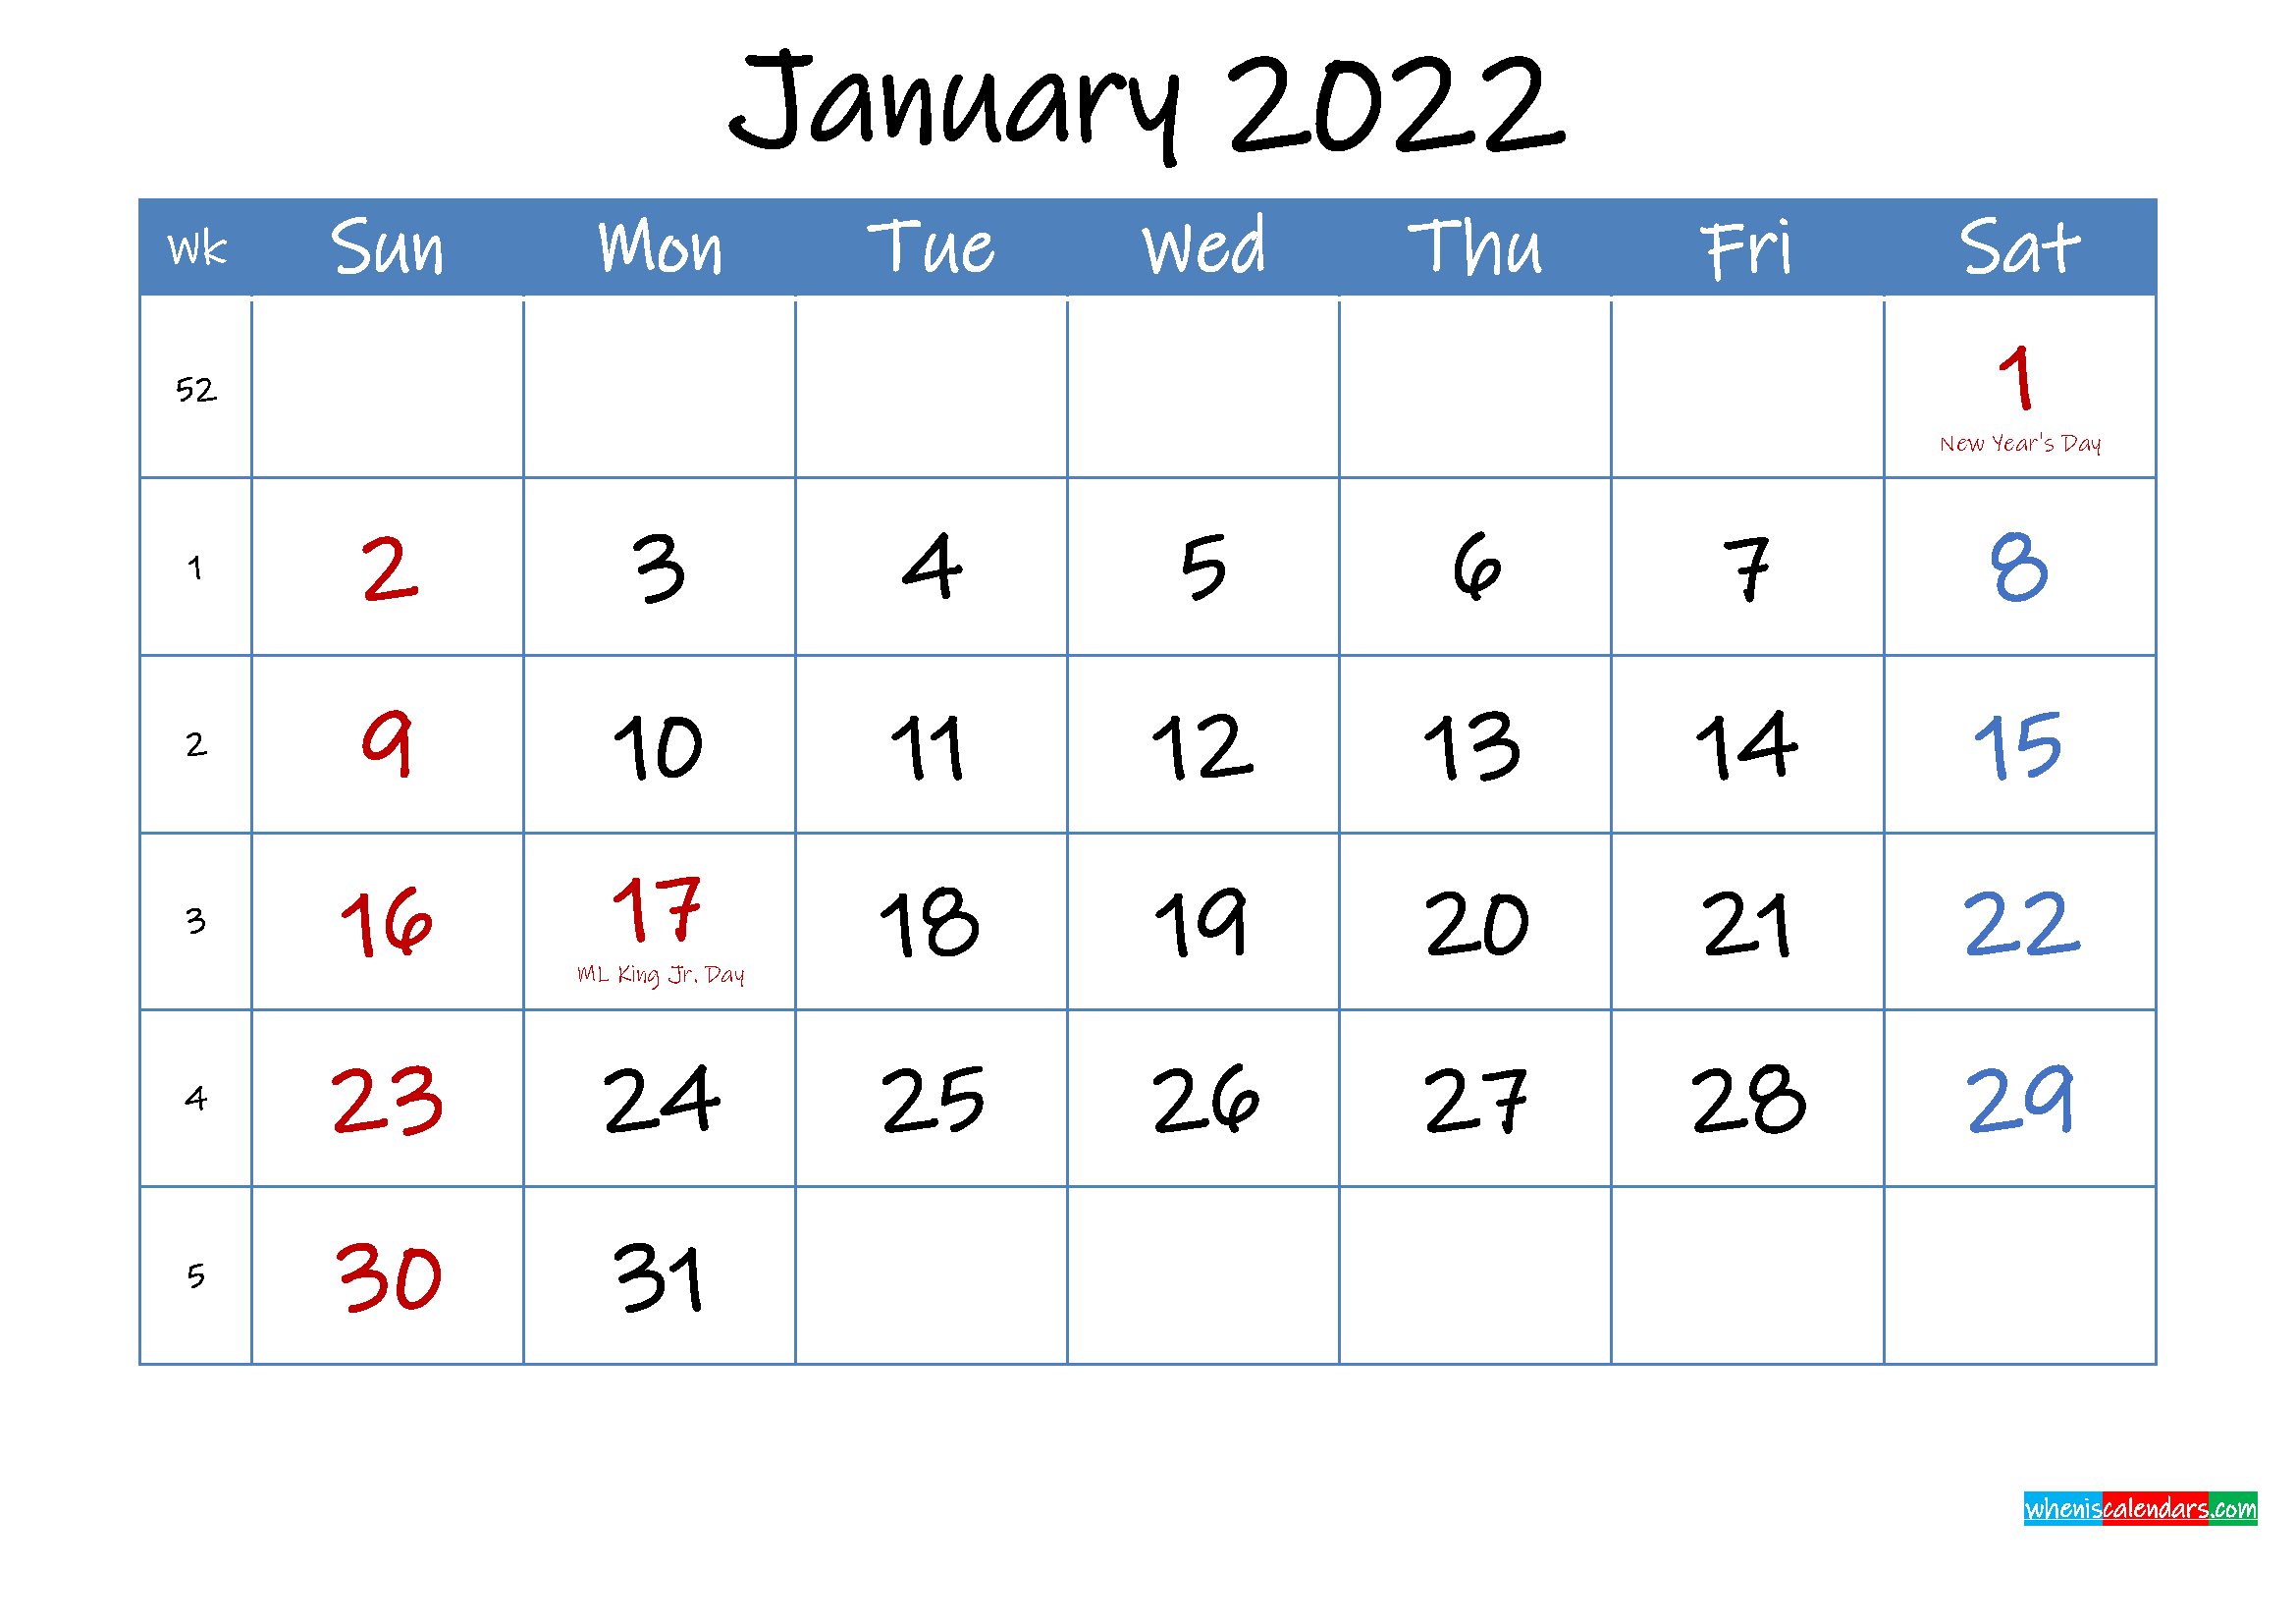 Catch Calendar 2022 January Month